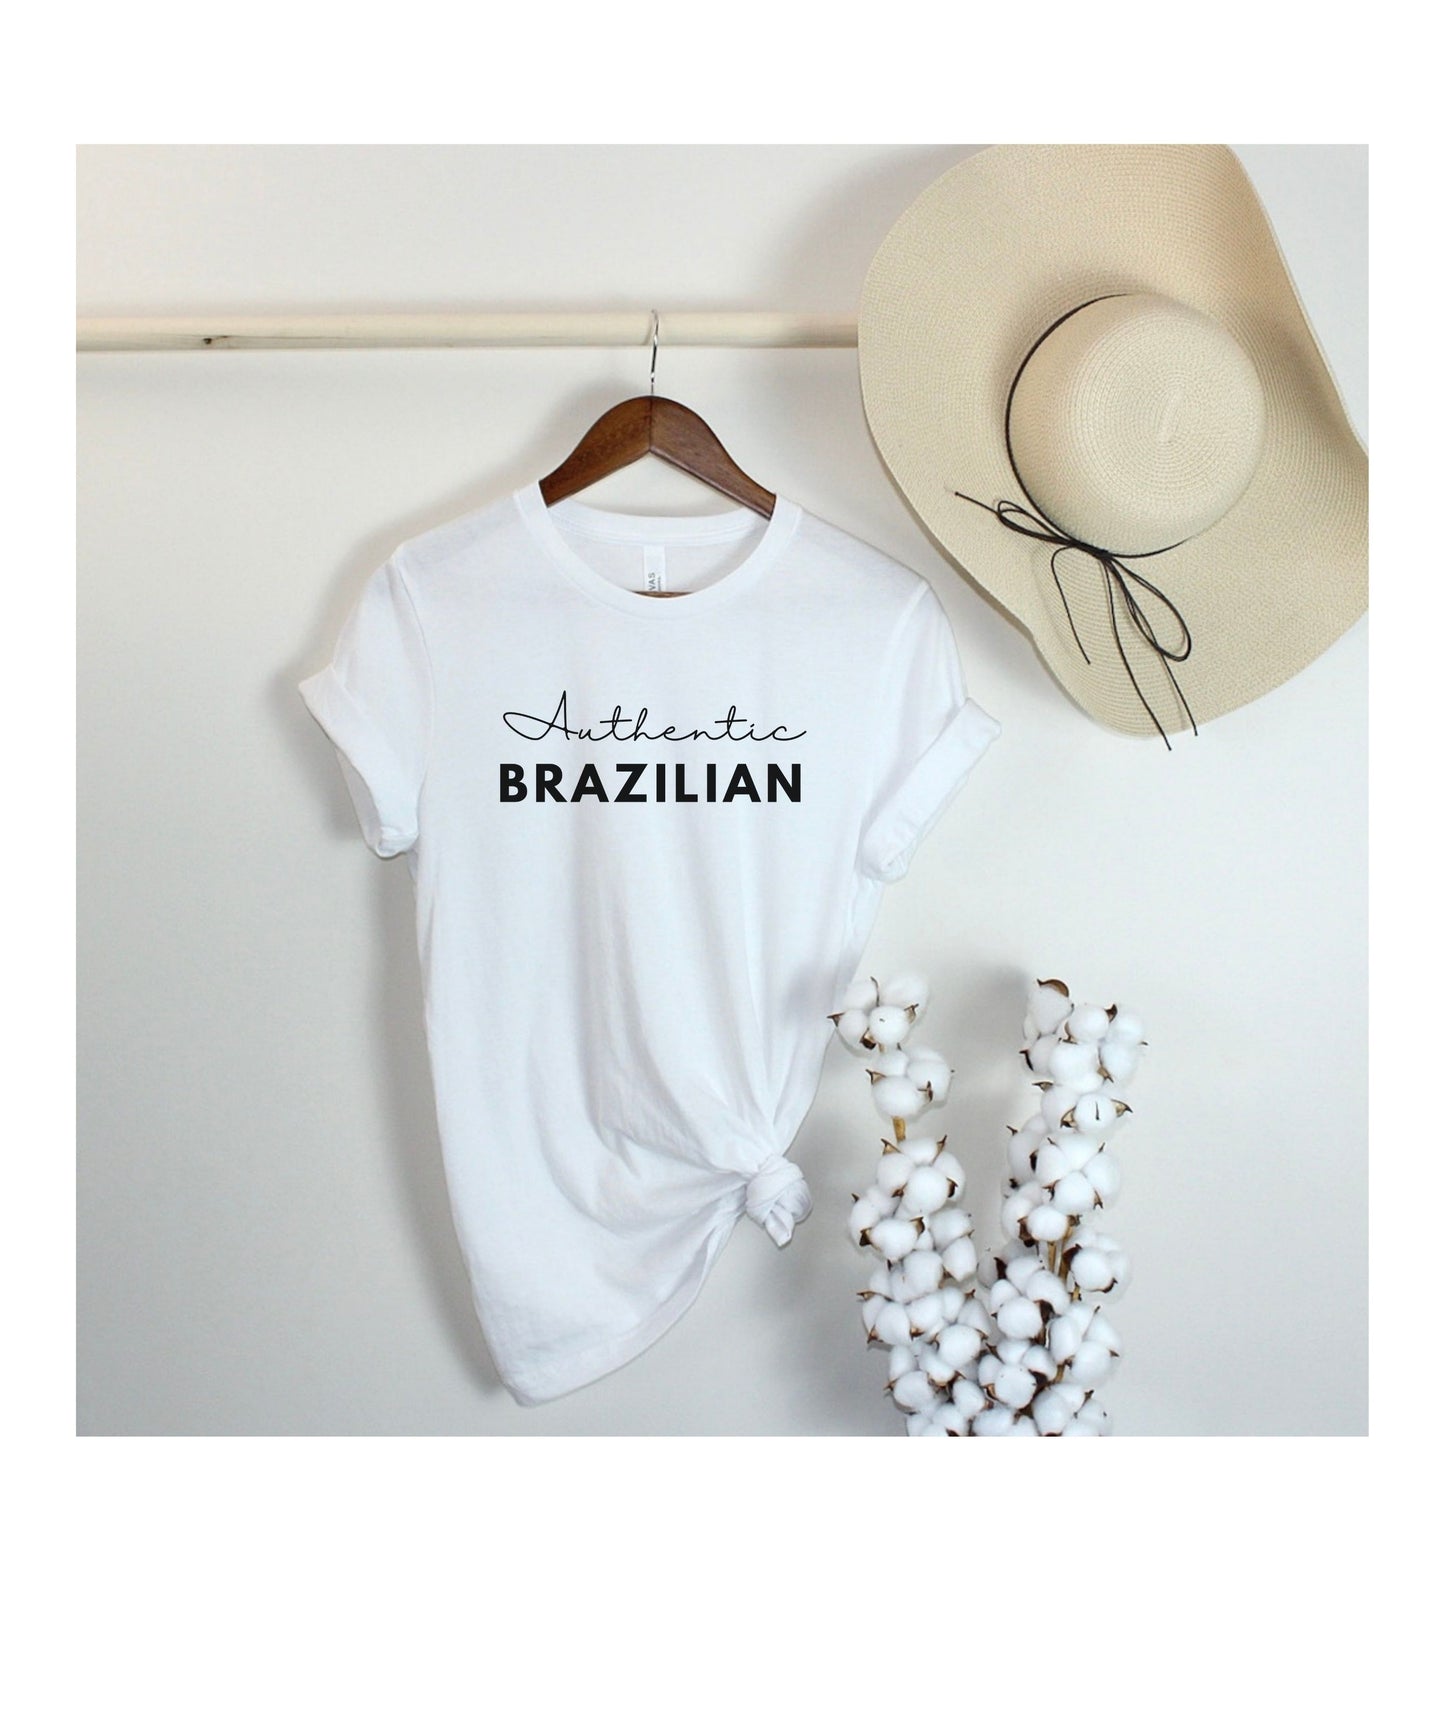 Authentic Brazilian Tee - Camiseta Brasileira